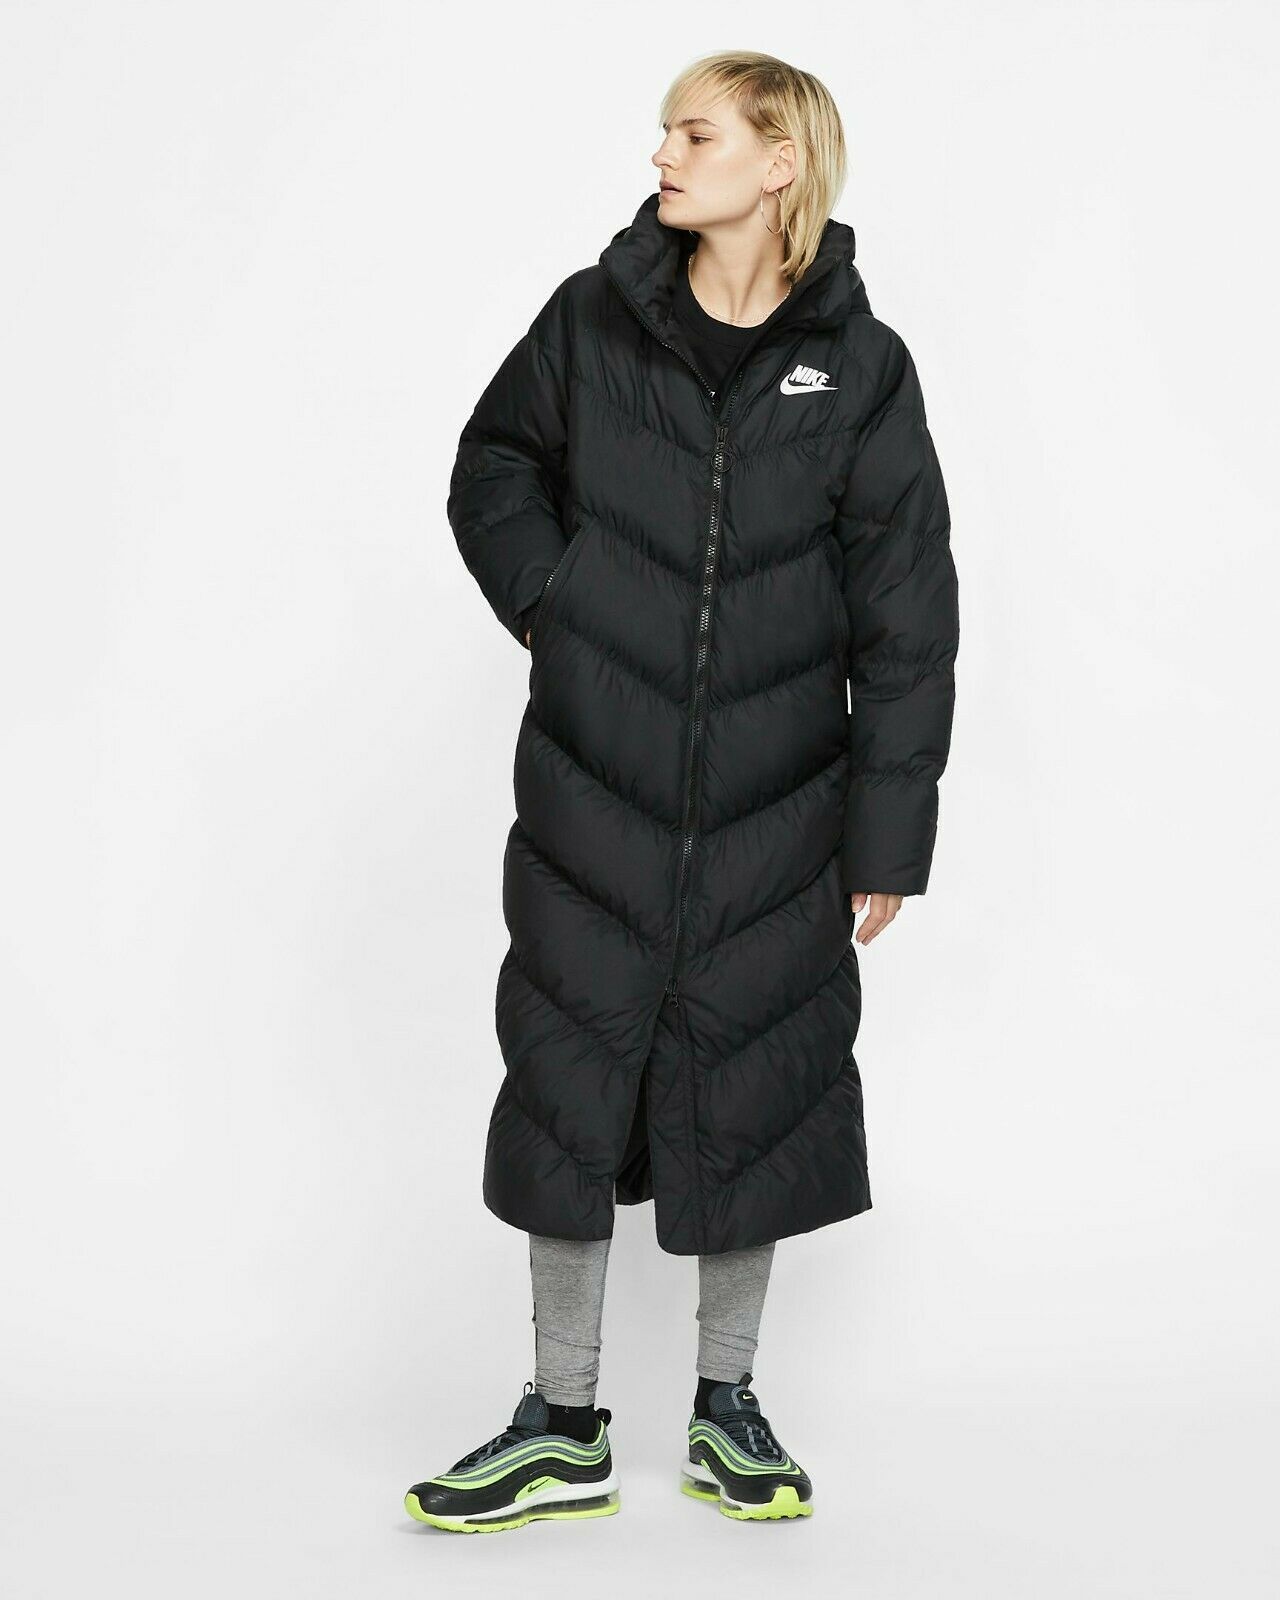 Primary image for Women's Nike Sportswear Parka Long Winter Coat, BV2881 010 Size XL Black/WHT